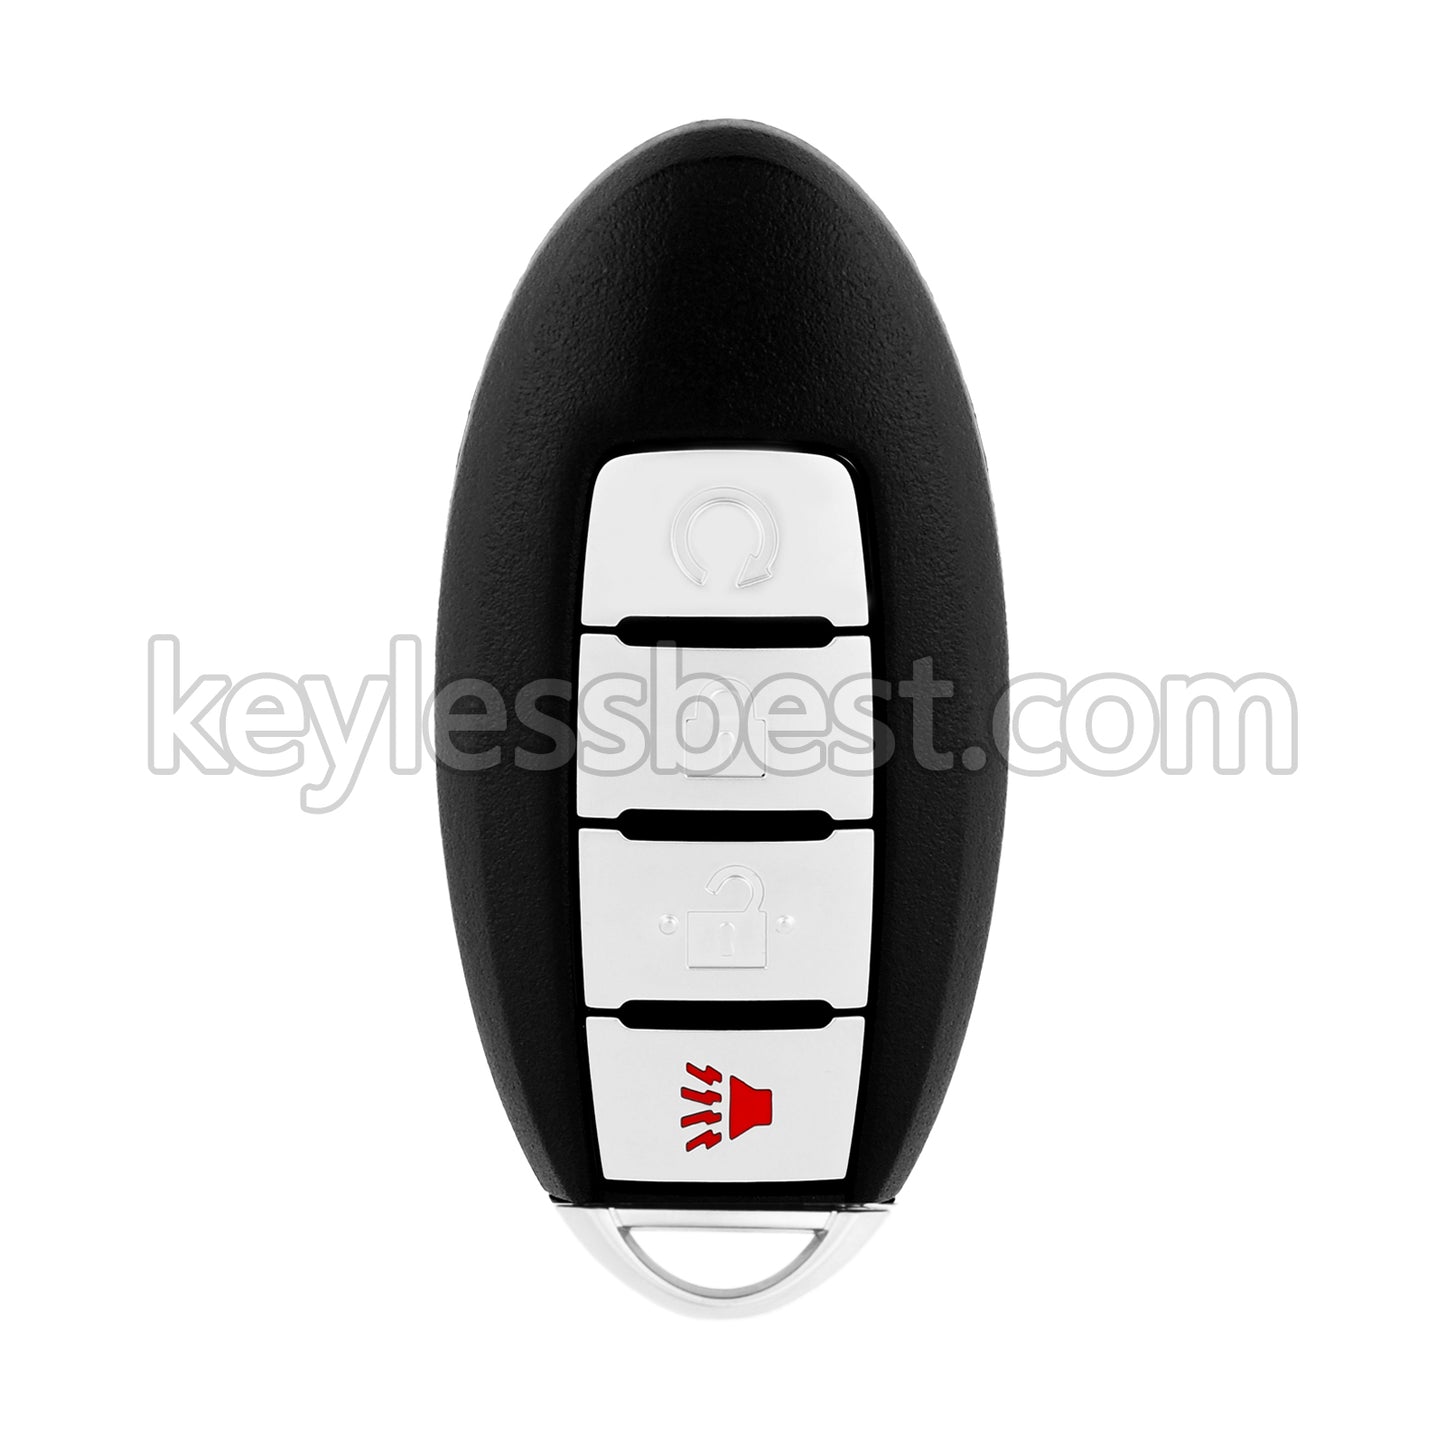 2019-2020 Nissan Pathfinder Titan Murano / 4 Buttons Remote Key / KR5TXN1 / 434MHz